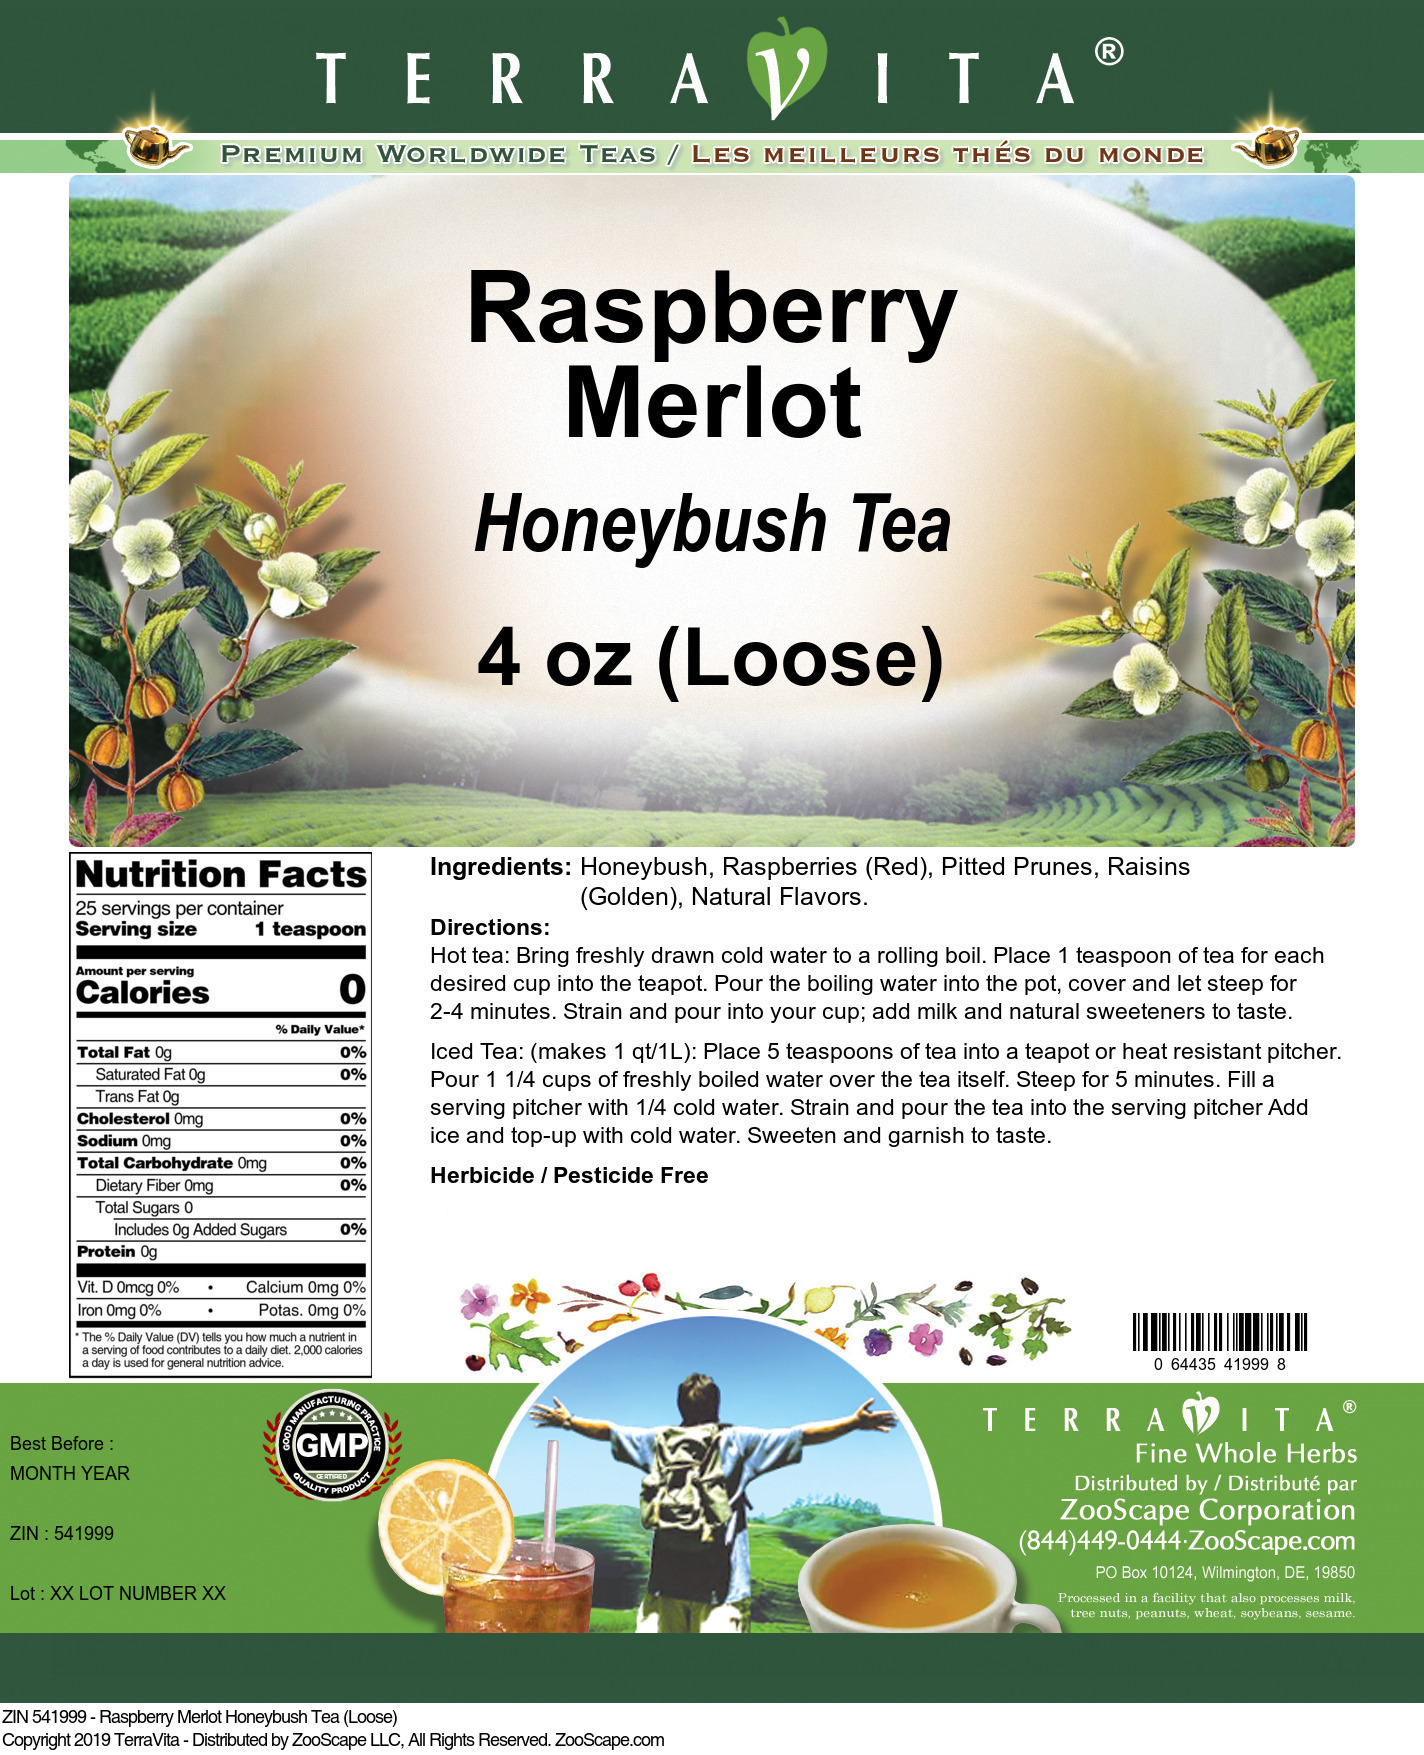 Raspberry Merlot Honeybush Tea (Loose) - Label